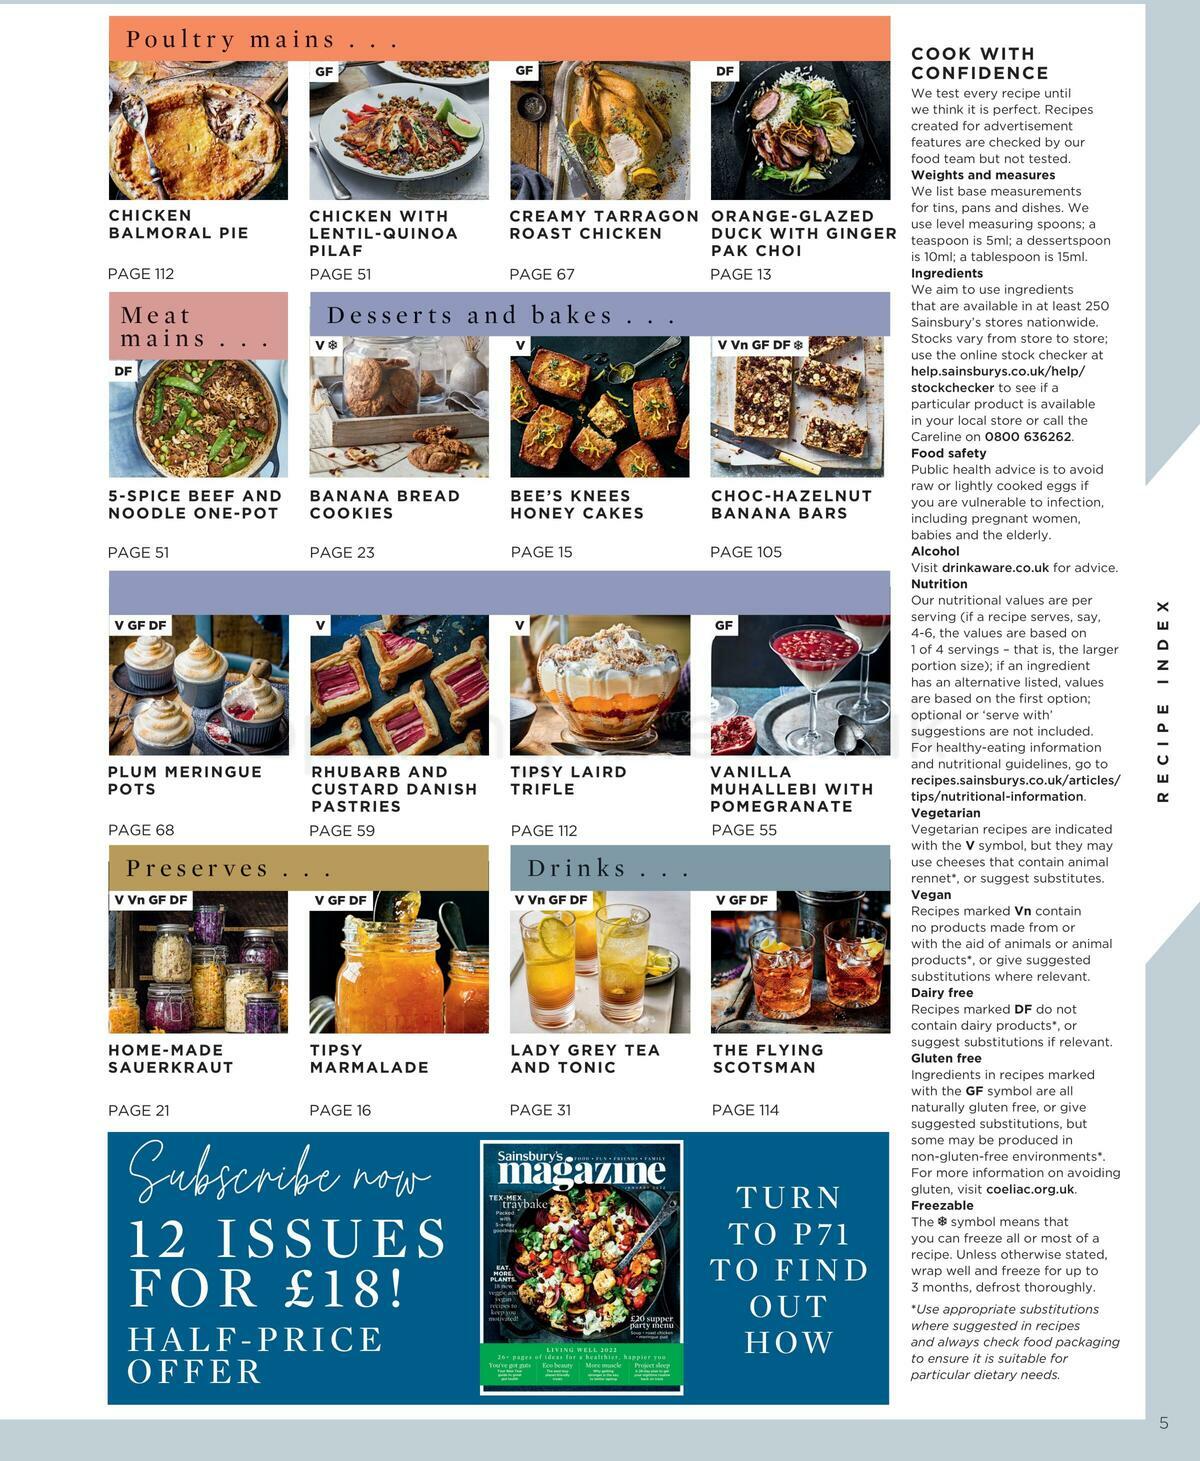 Sainsbury's Magazine January Offers from 1 January